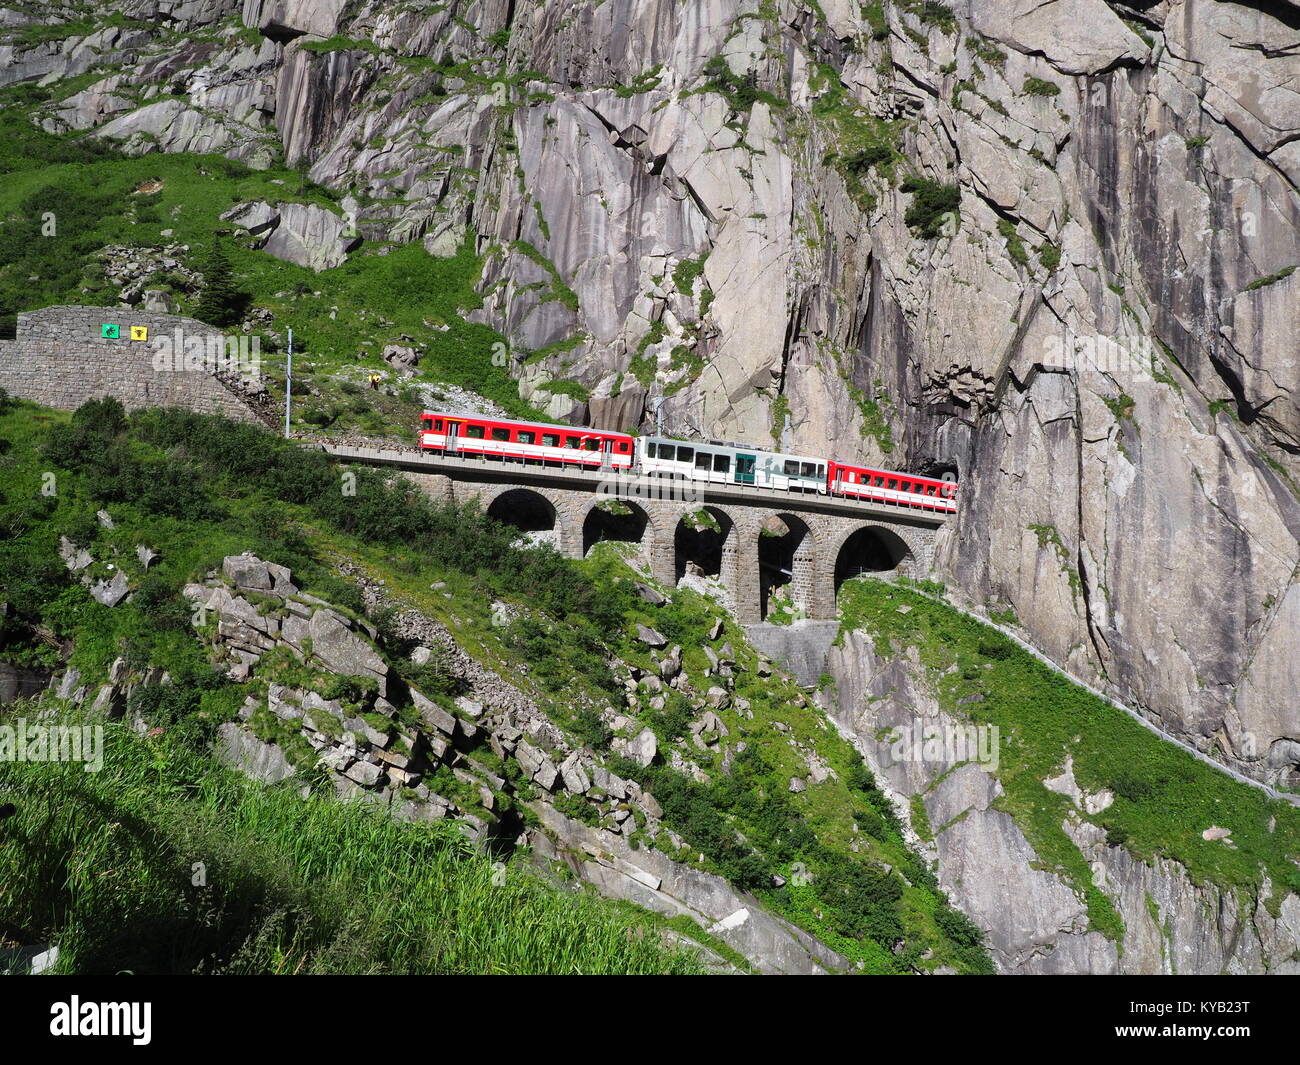 Red express train on scenic stony St. Gotthard railway bridge and tunnel, swiss Alps, SWITZERLAND Stock Photo